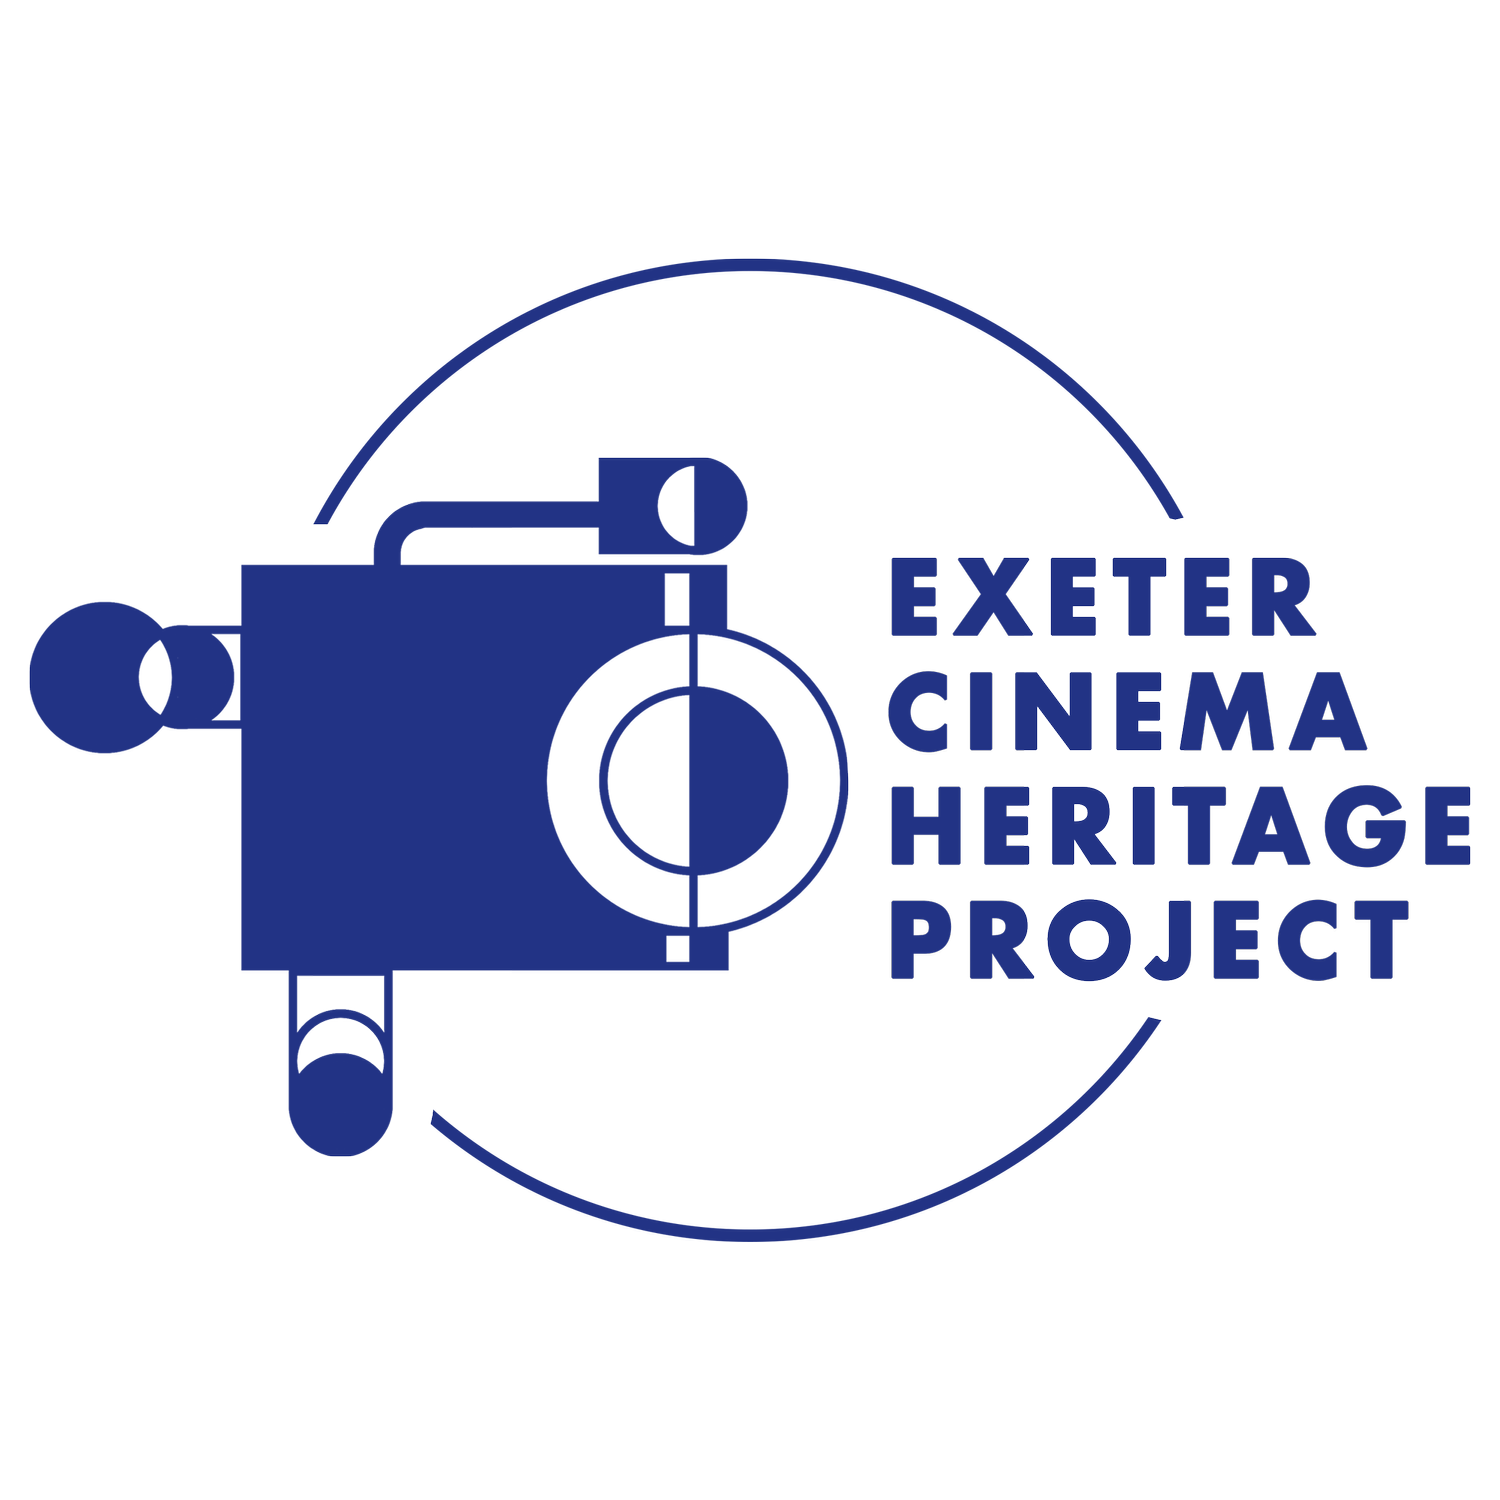 Exeter Cinema Heritage Project